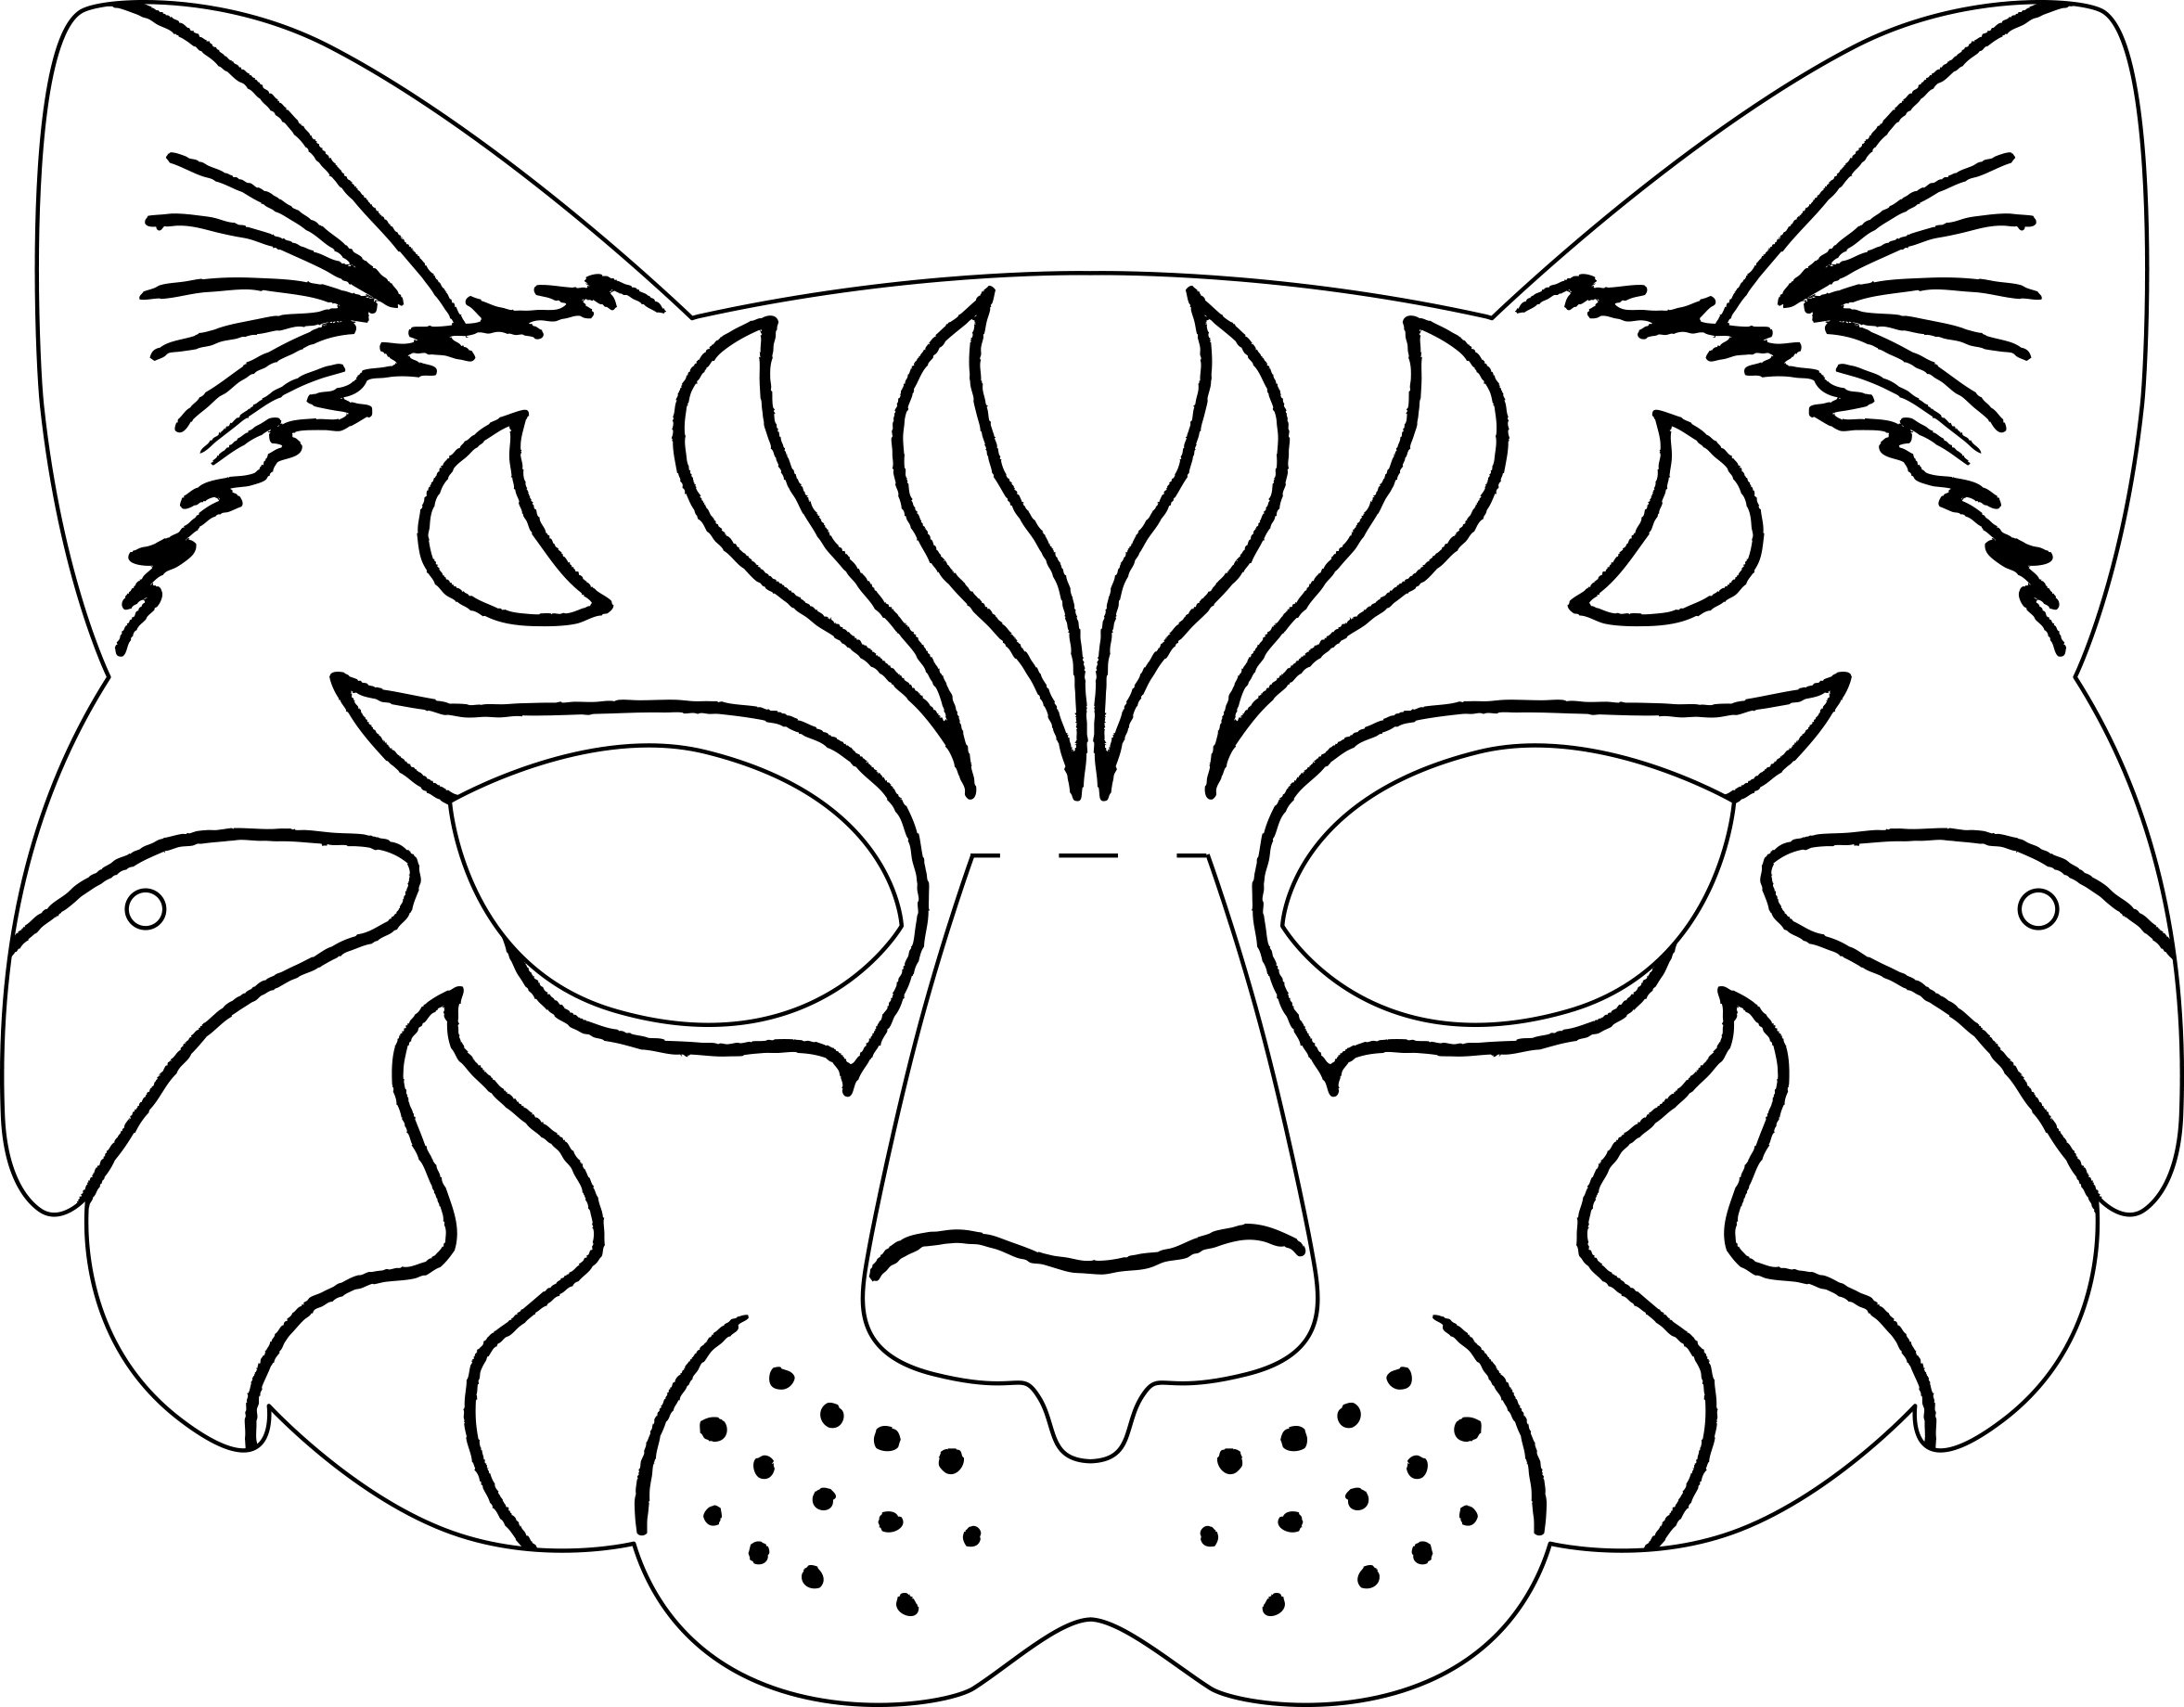 Шаблон маски на 1 апреля. Маска тигра. Макет маски для лица. Новогодняя маска тигр. Трафарет - маска.